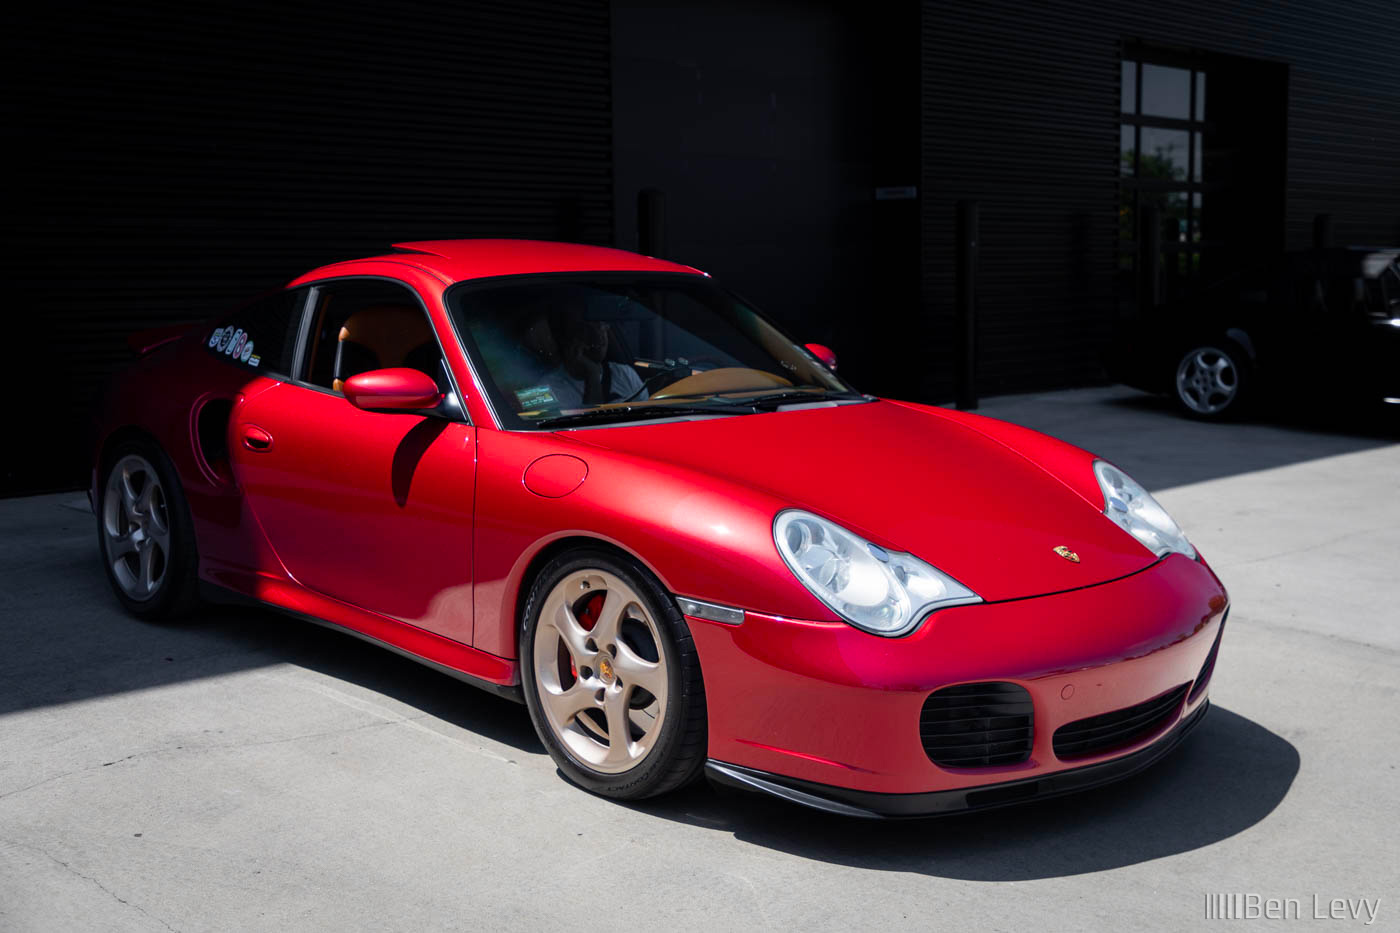 Orient Red Porsche 911 Turbo in the Shadows